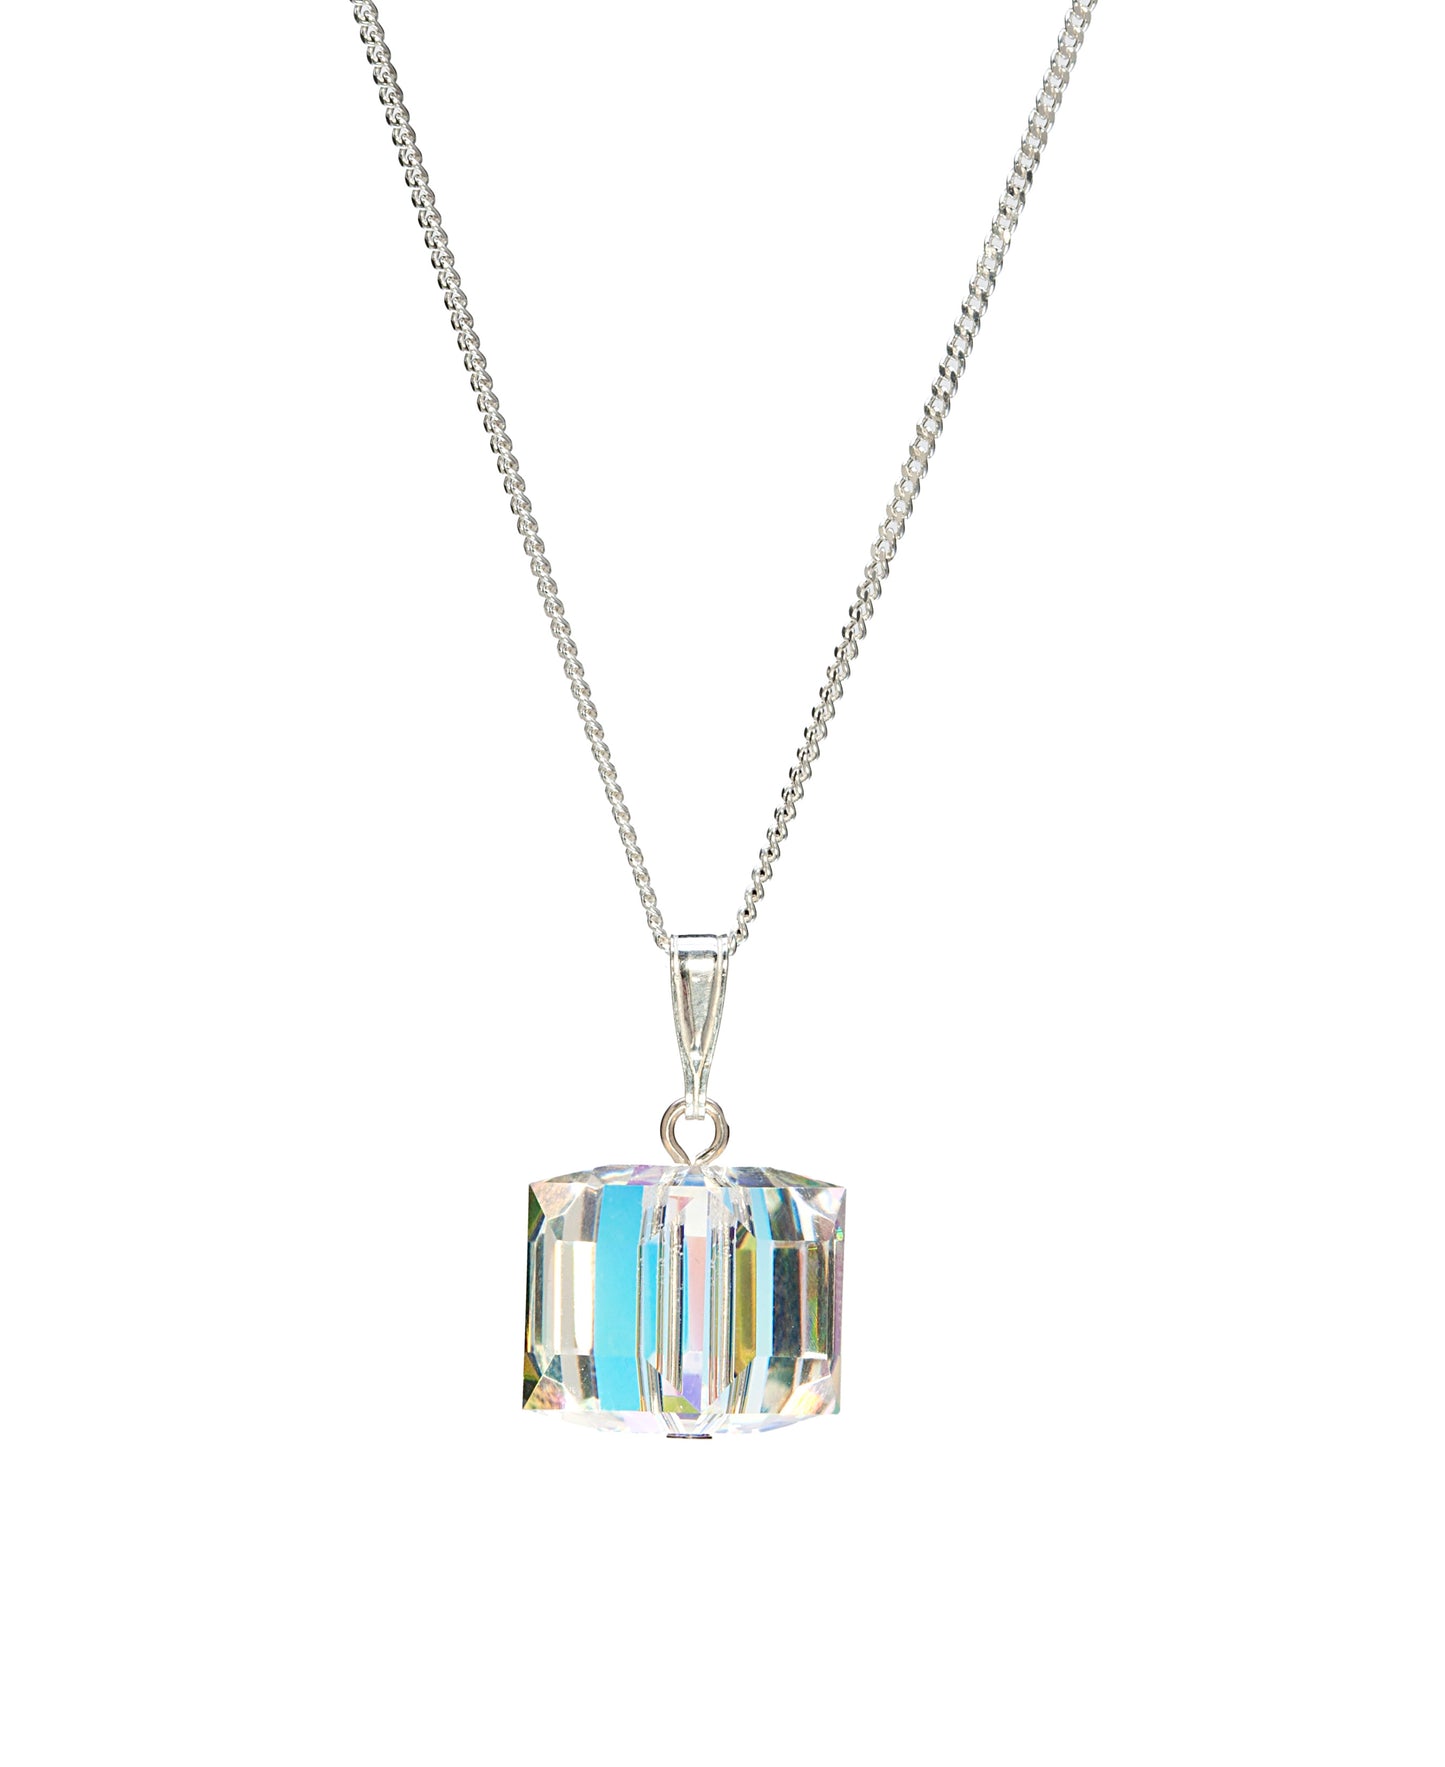 Silvertone Cube Crystal Pendant Necklace